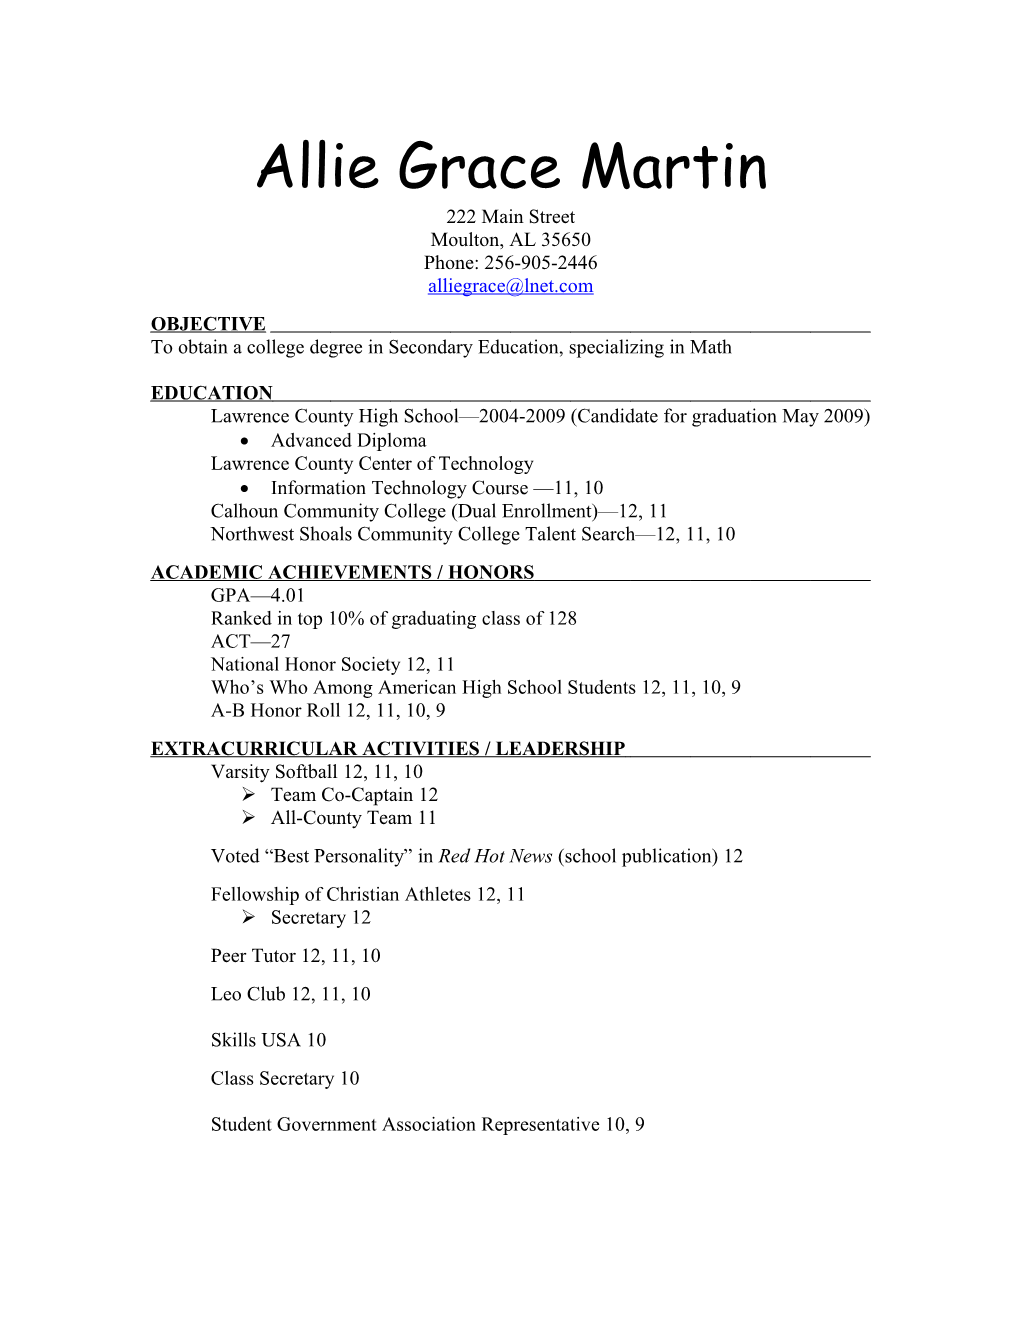 Allie Grace Martin